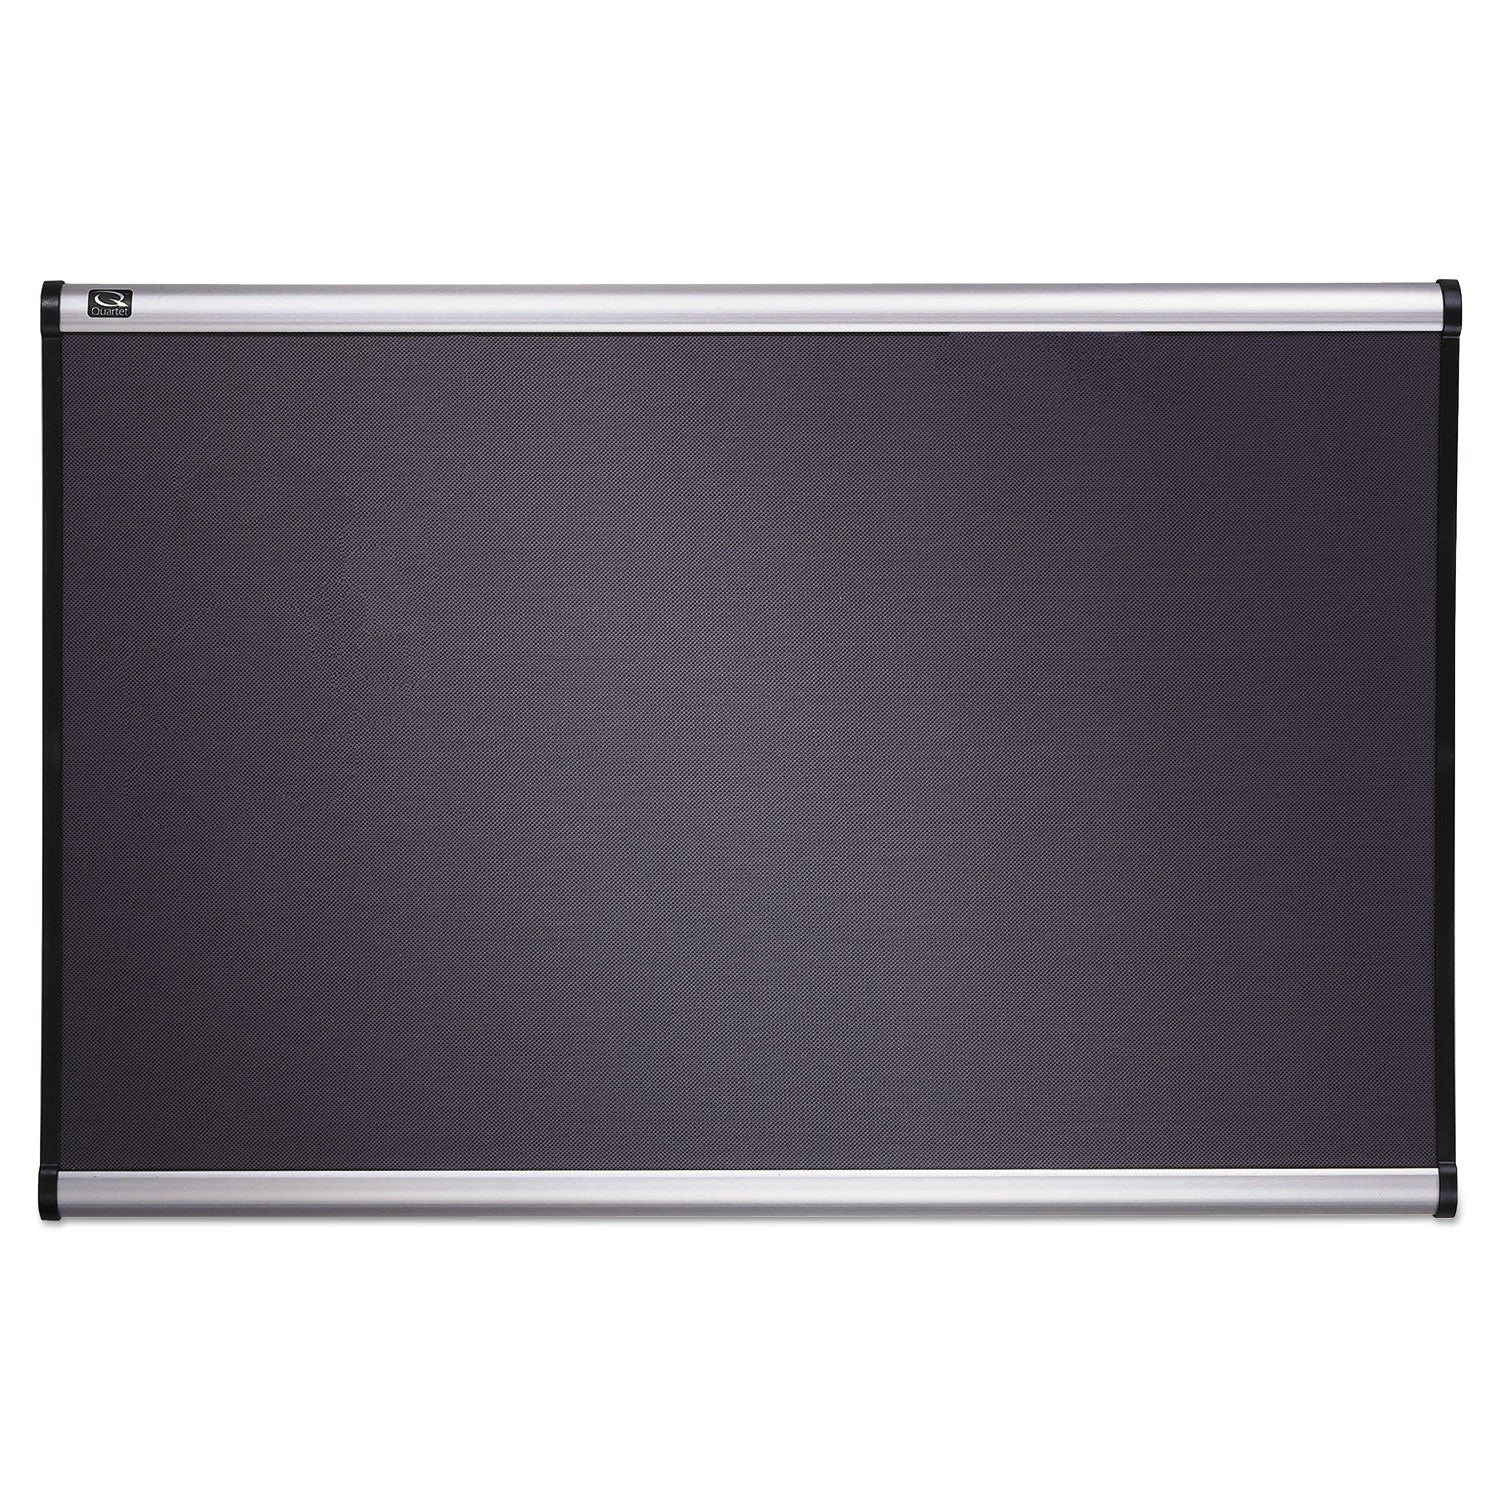 Prestige Gray Diamond Mesh Bulletin Board, 36 x 24, Gray Surface, Silver Aluminum/Plastic Frame - 